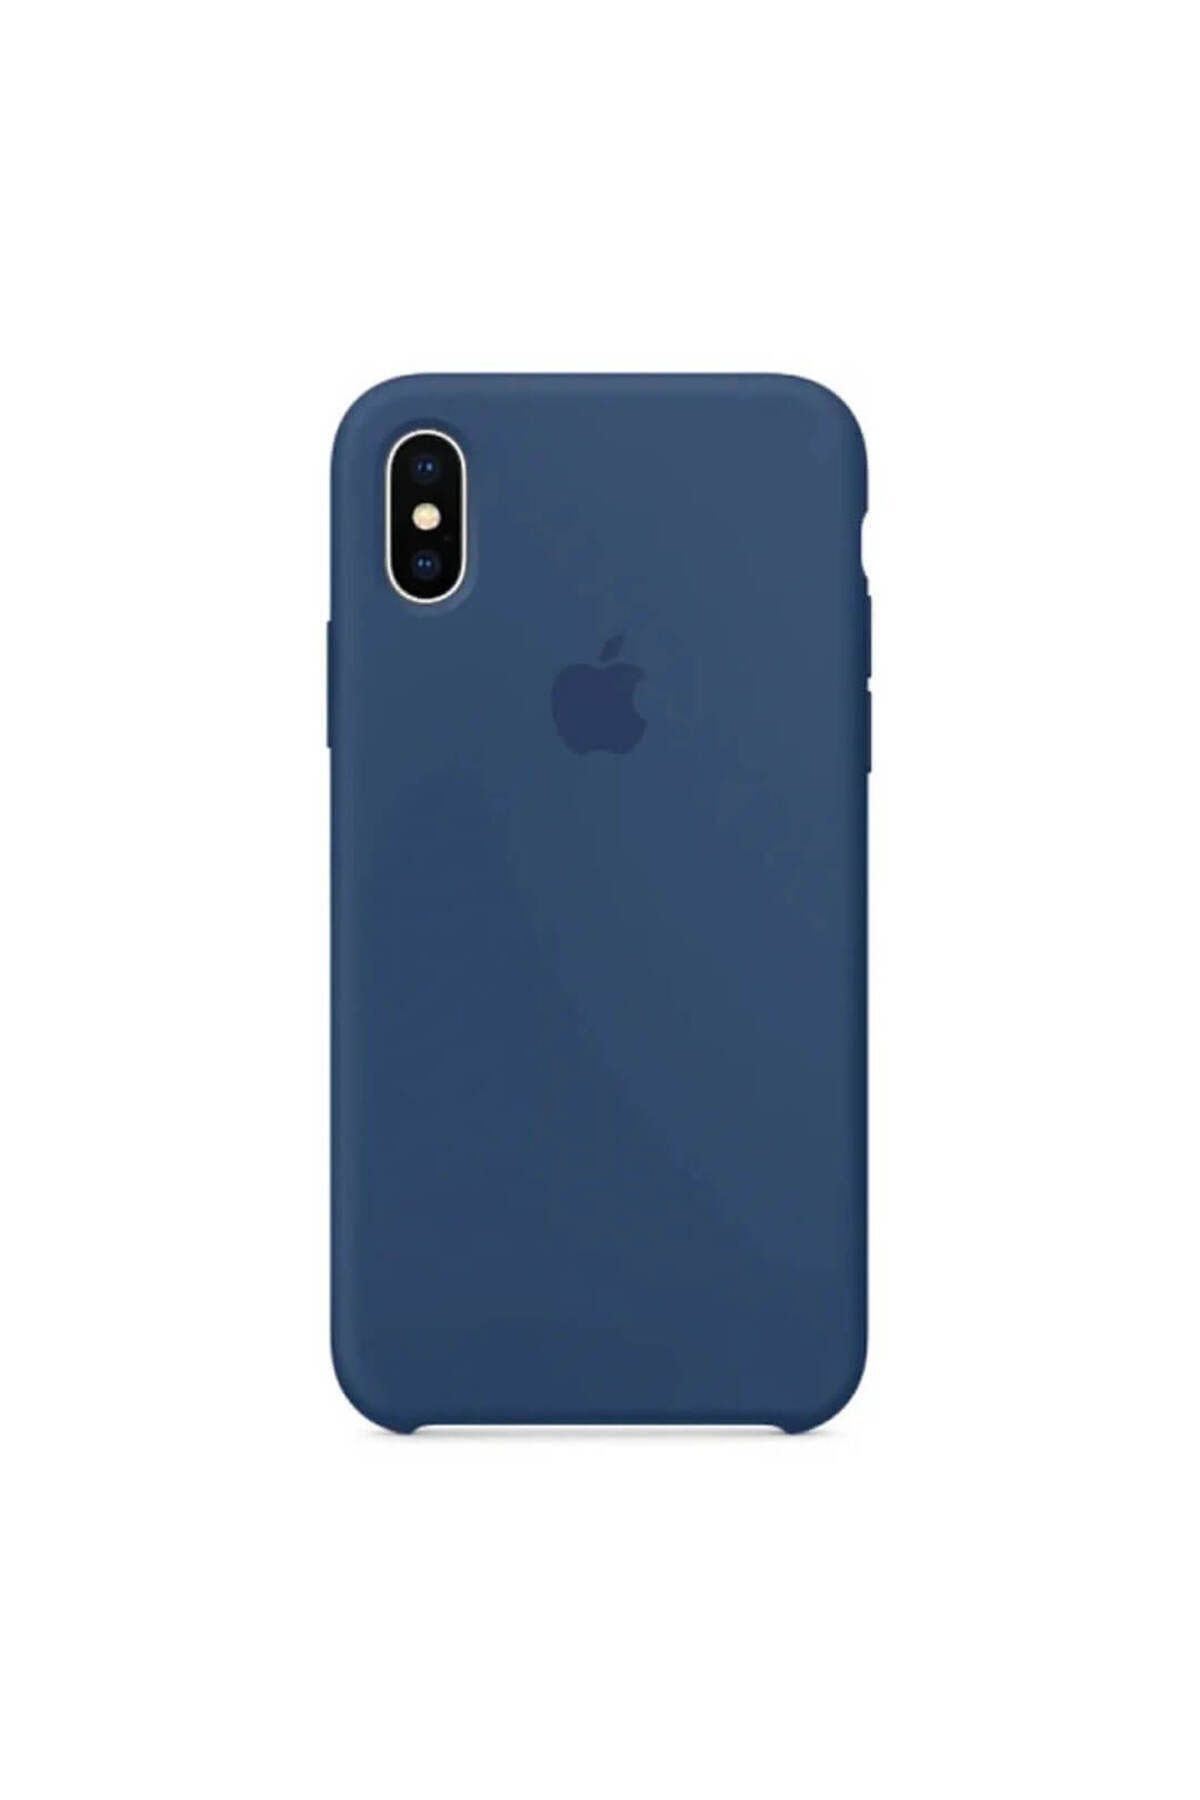 Stendhal iPhone X ile uyumlu Kılıf A+ Deluxe Class (Limited Stock) - Kutup Mavisi